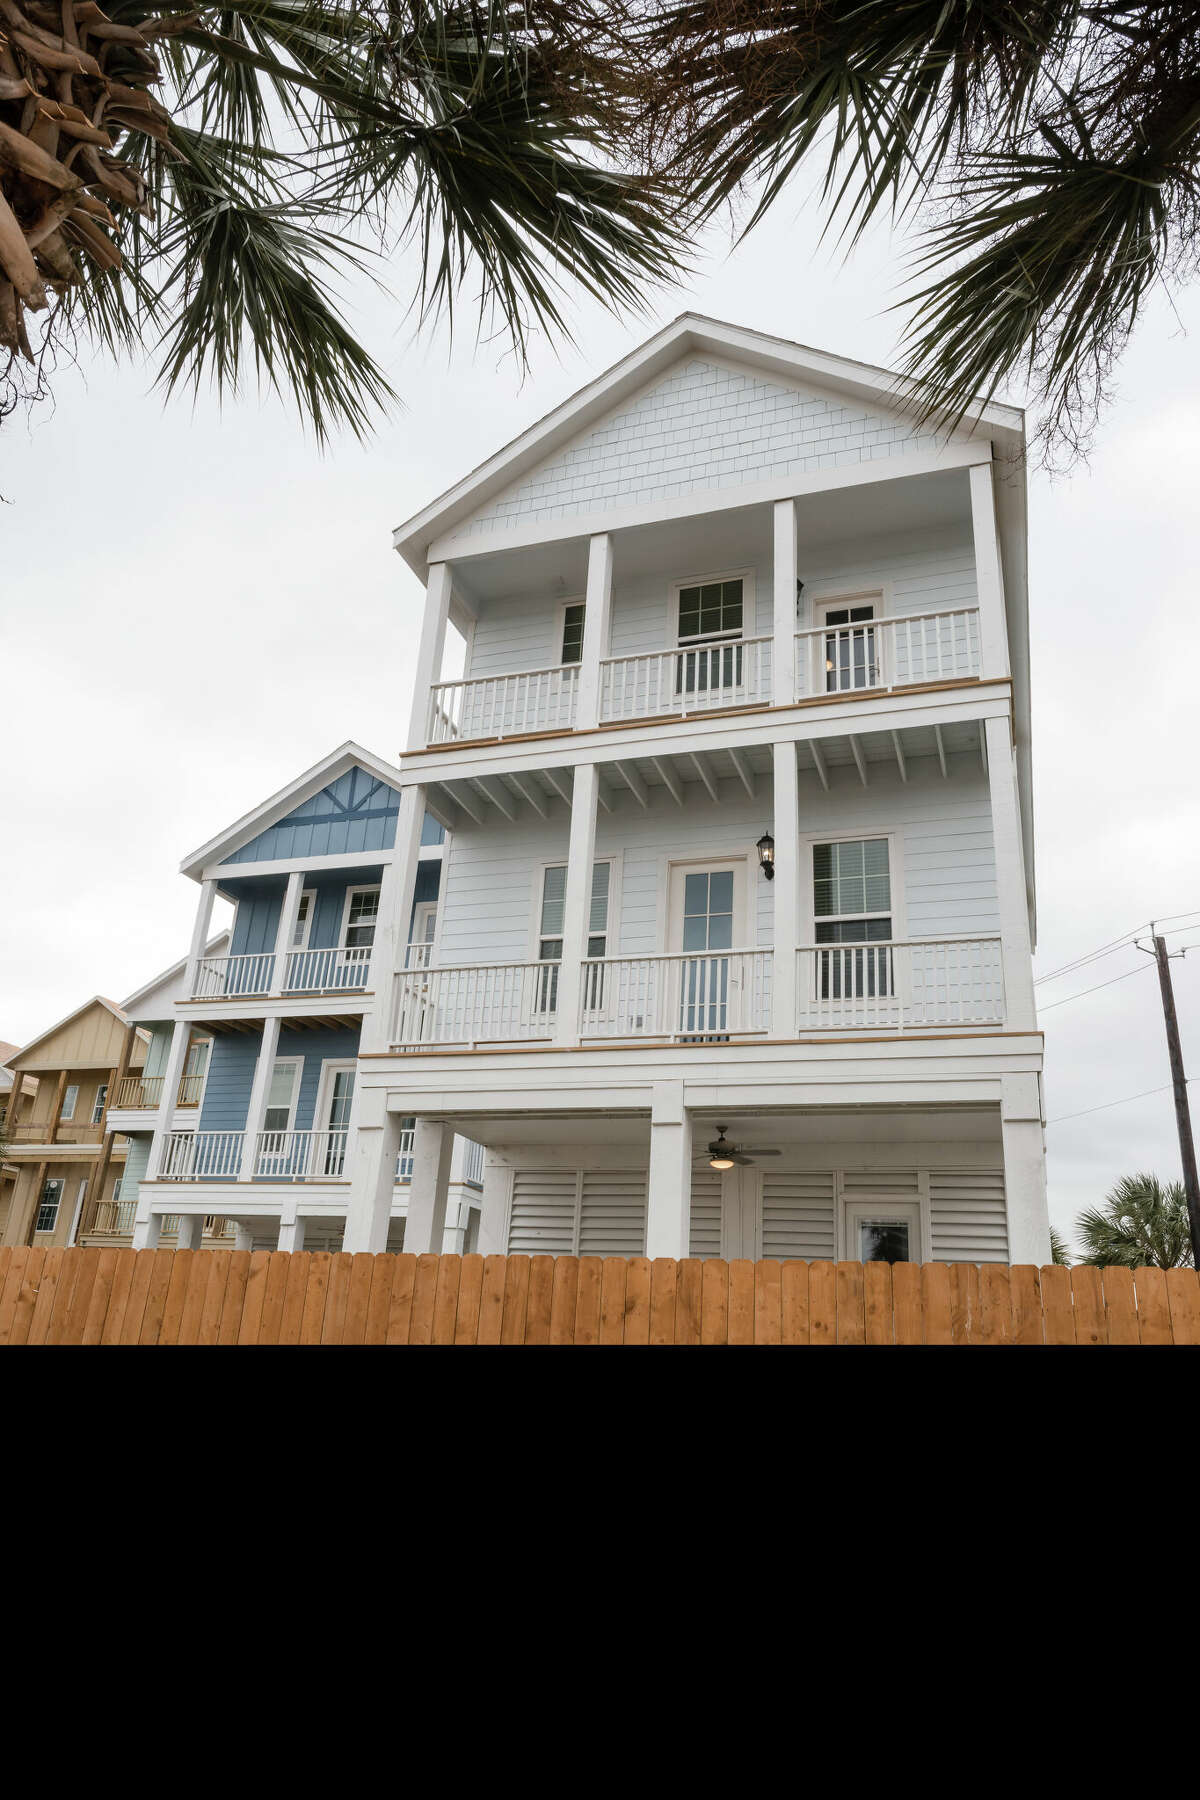 Wan Bridge has opened Palm Bay Galveston, a seaside build to rent community in the 4500 block of Stewart Road in Galveston.